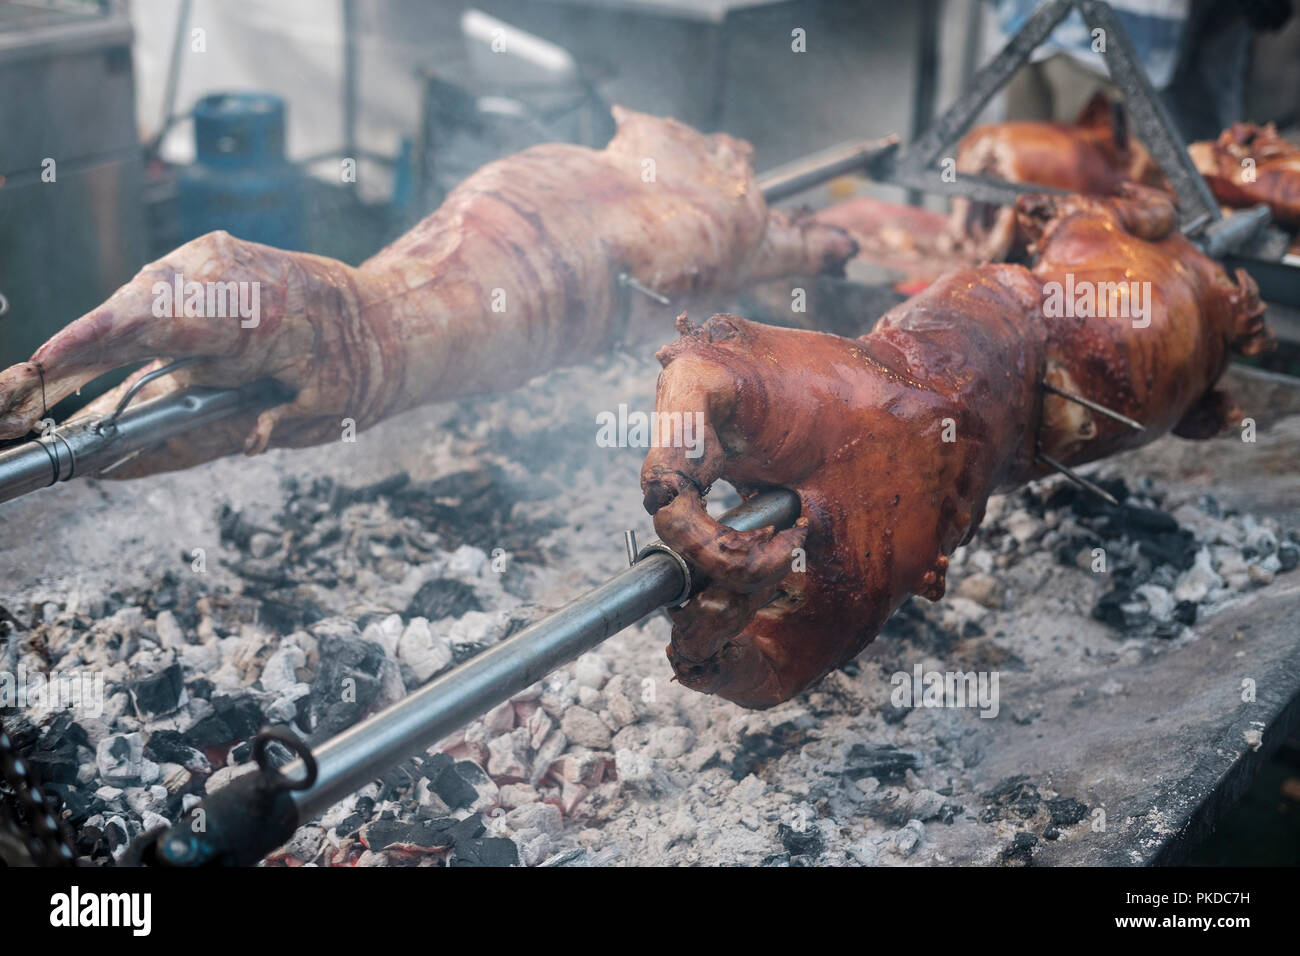 Whole pork and lamb roatsing on spit Stock Photo